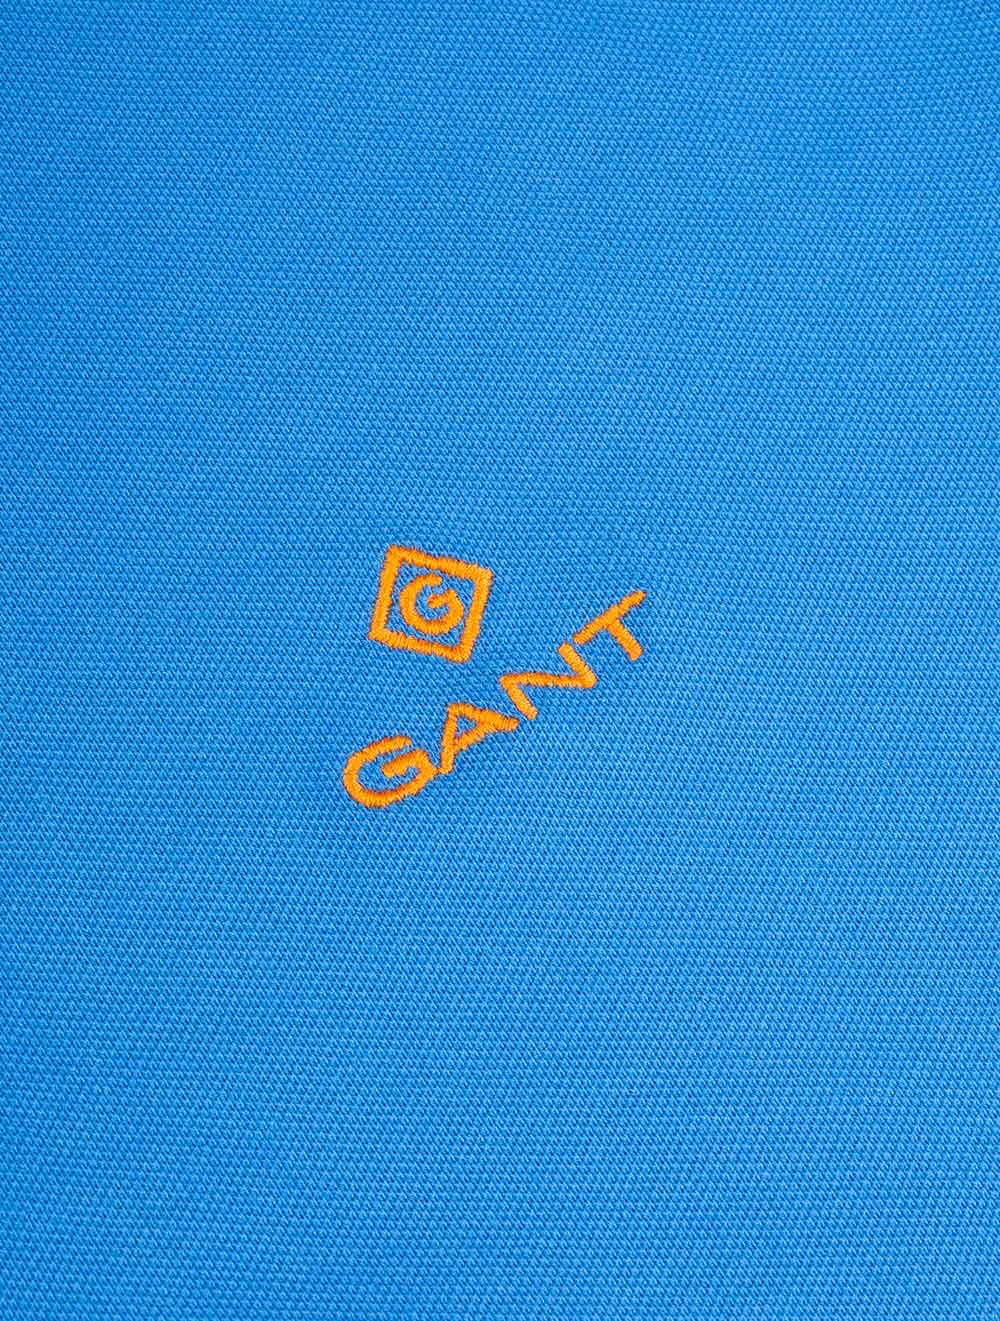 GANT Day Blue Contrast Collar Pique Short Sleeved Rugger 